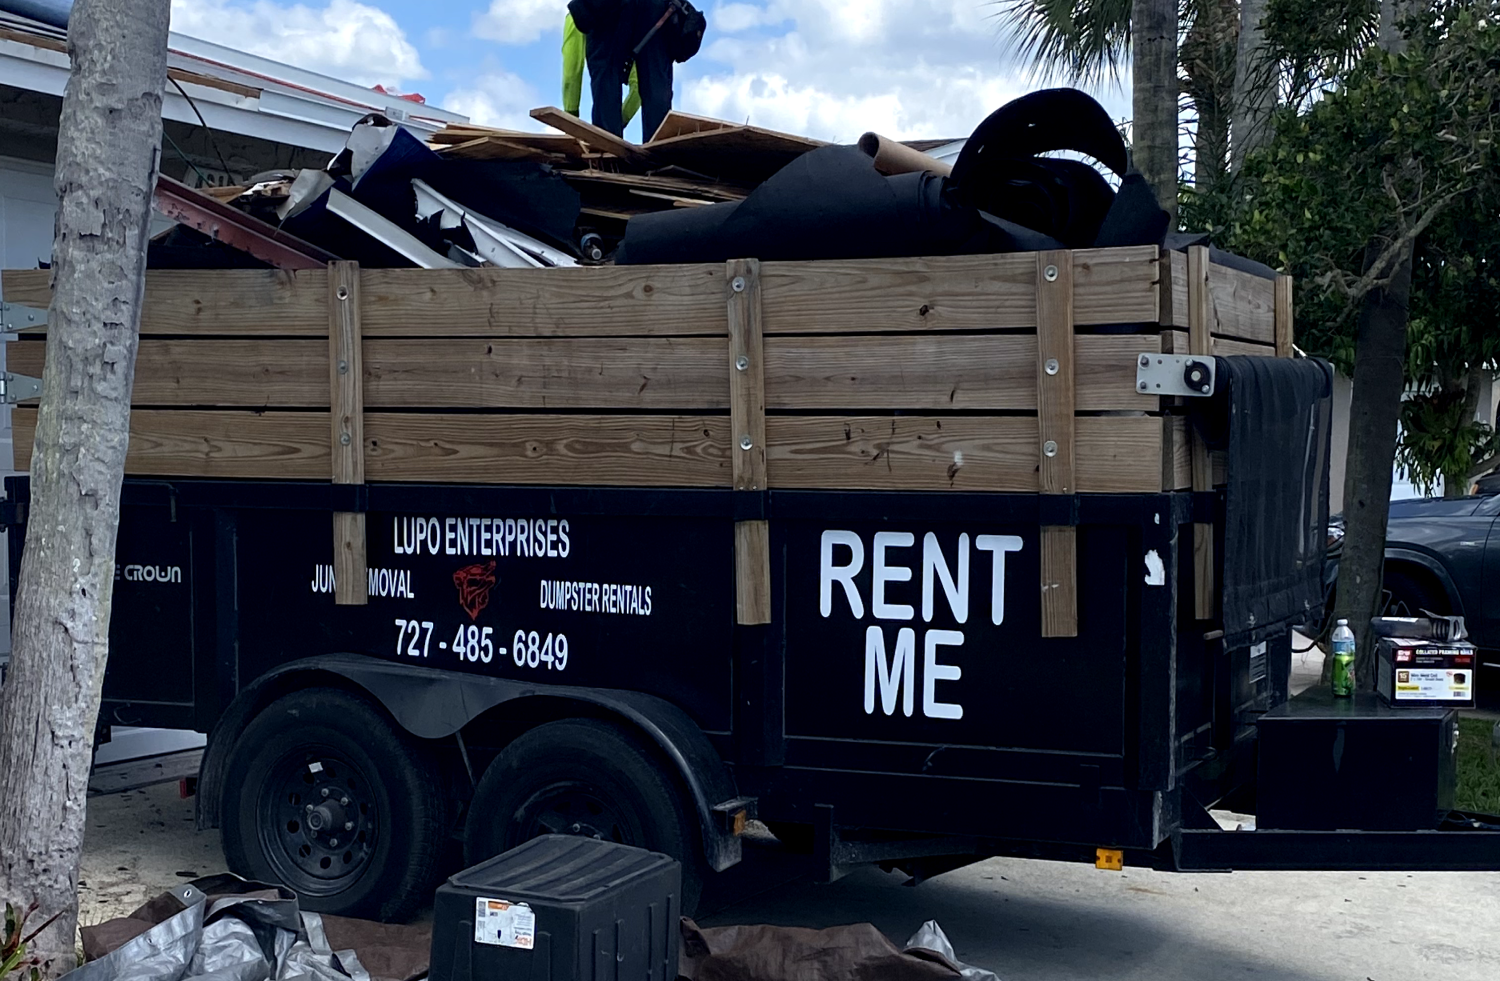 Dumpster rental service in New Port Richey